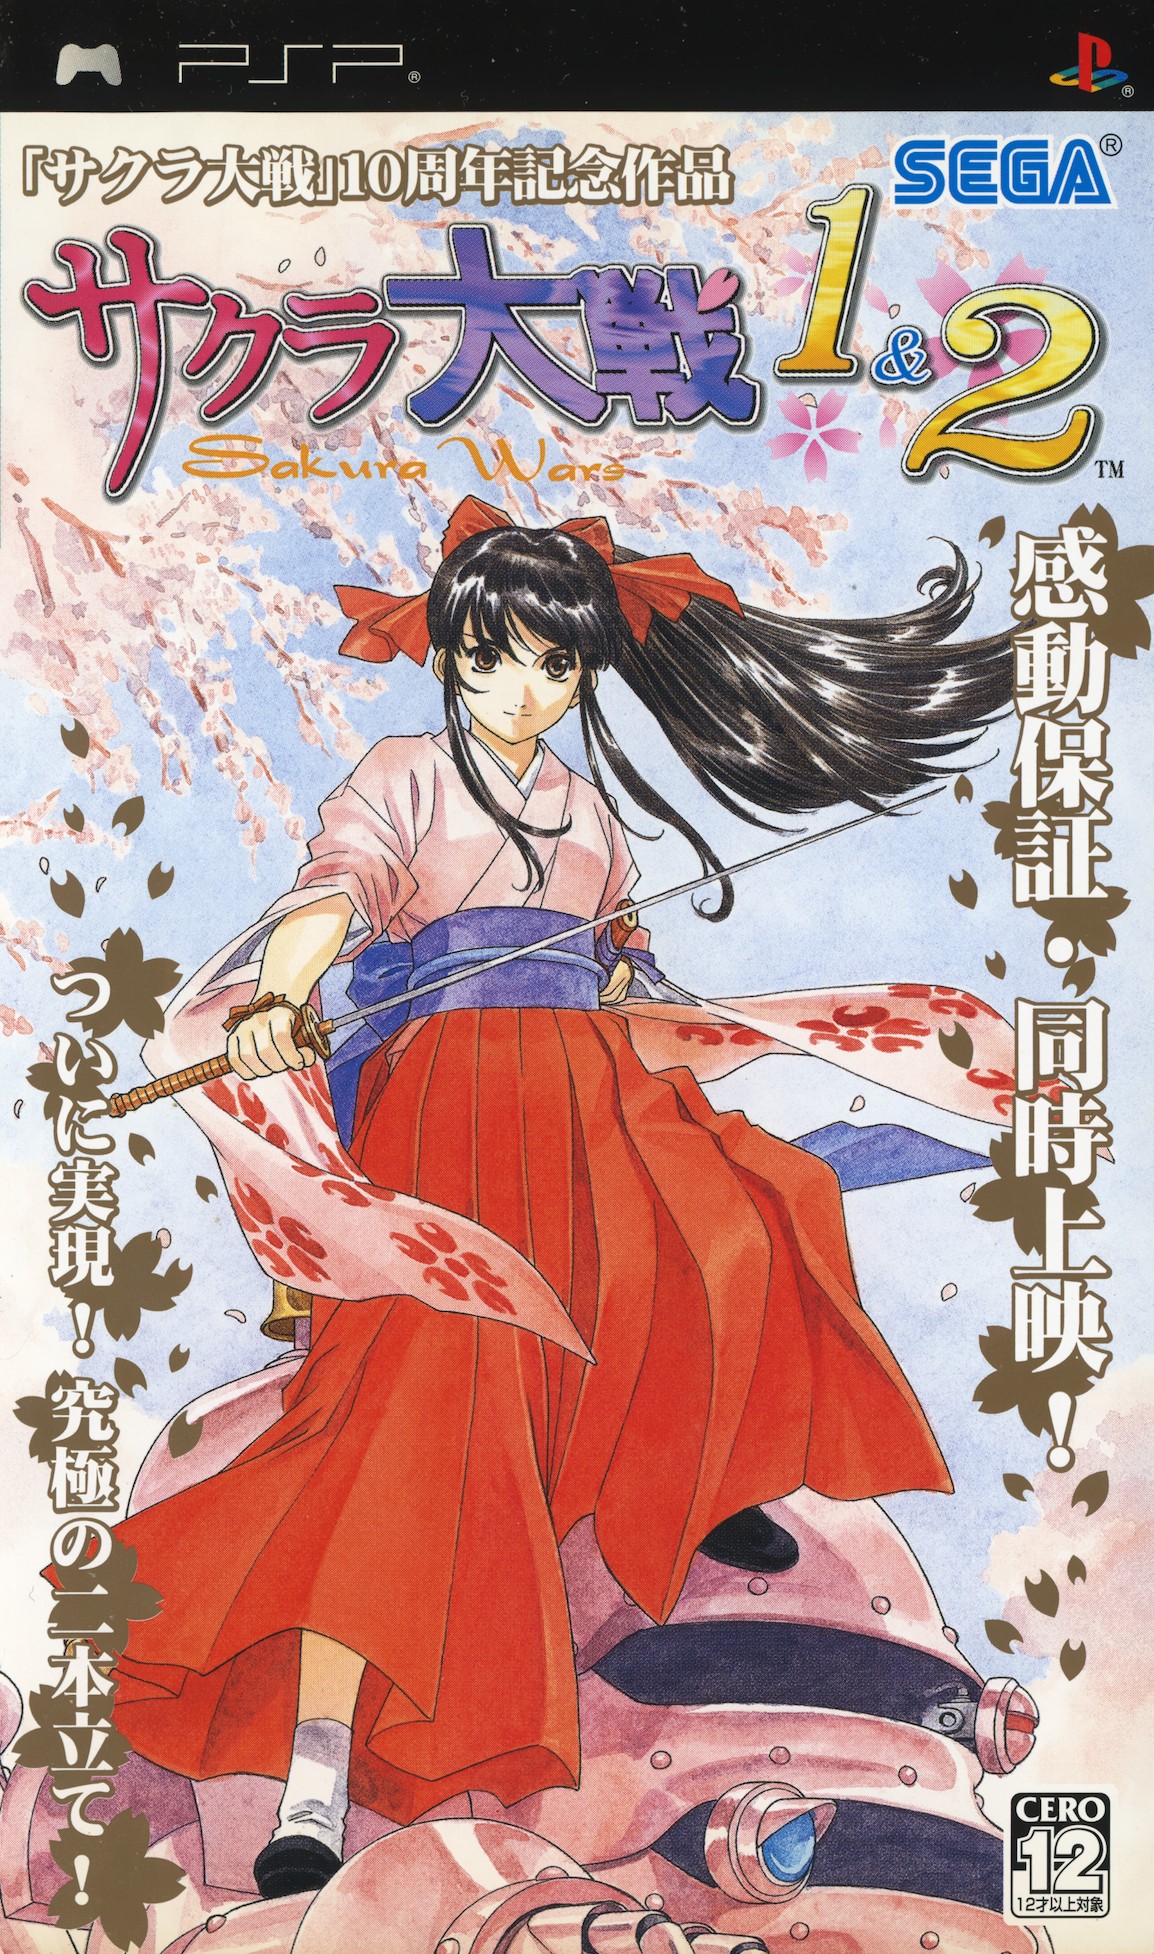 Sakura Wars 1 & 2 | Sakura Wars Wiki | Fandom